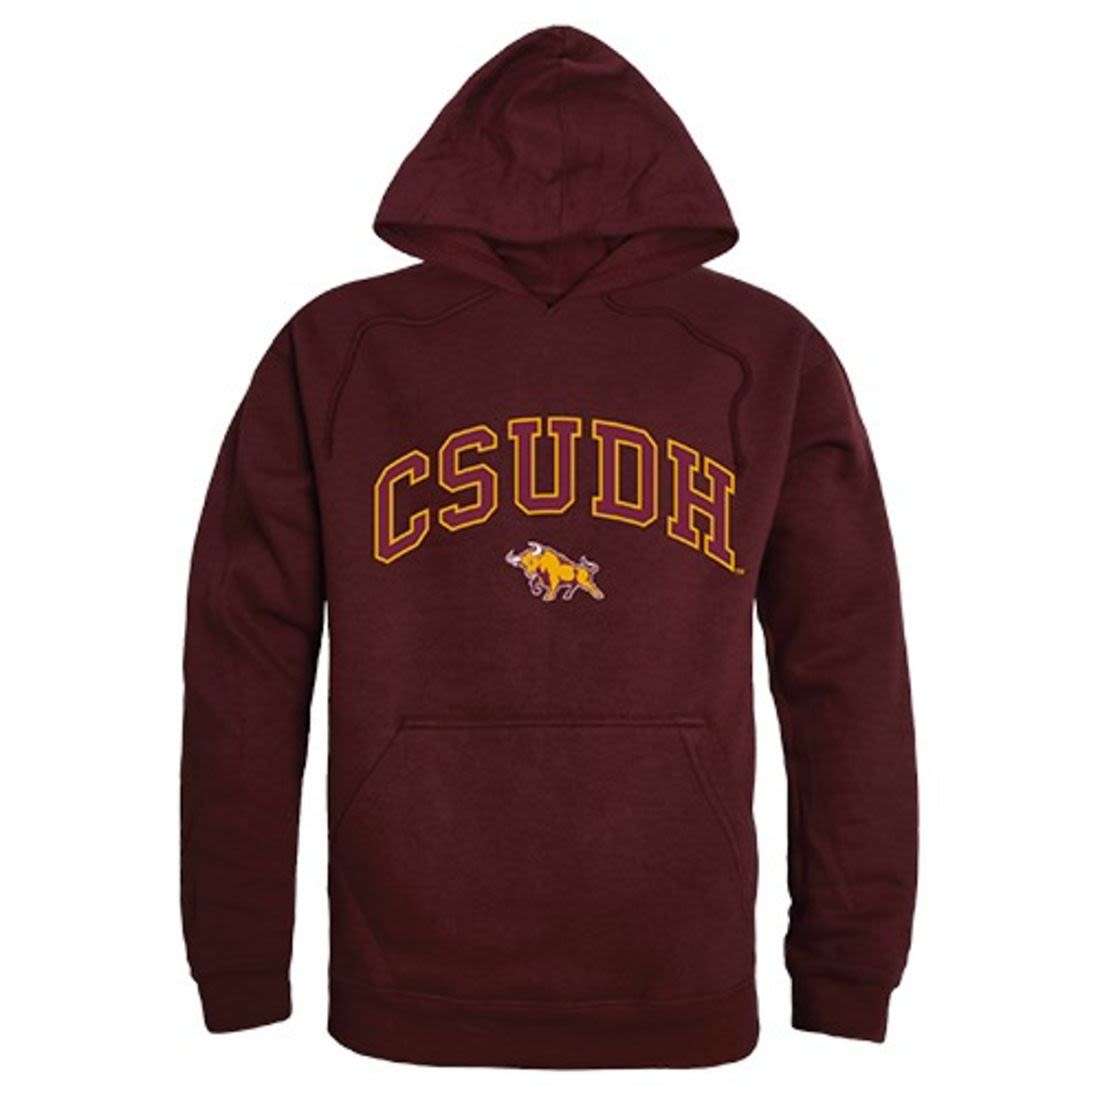 CSUDH California State University Dominguez Hills Toros Campus Hoodie Sweatshirt Maroon-Campus-Wardrobe